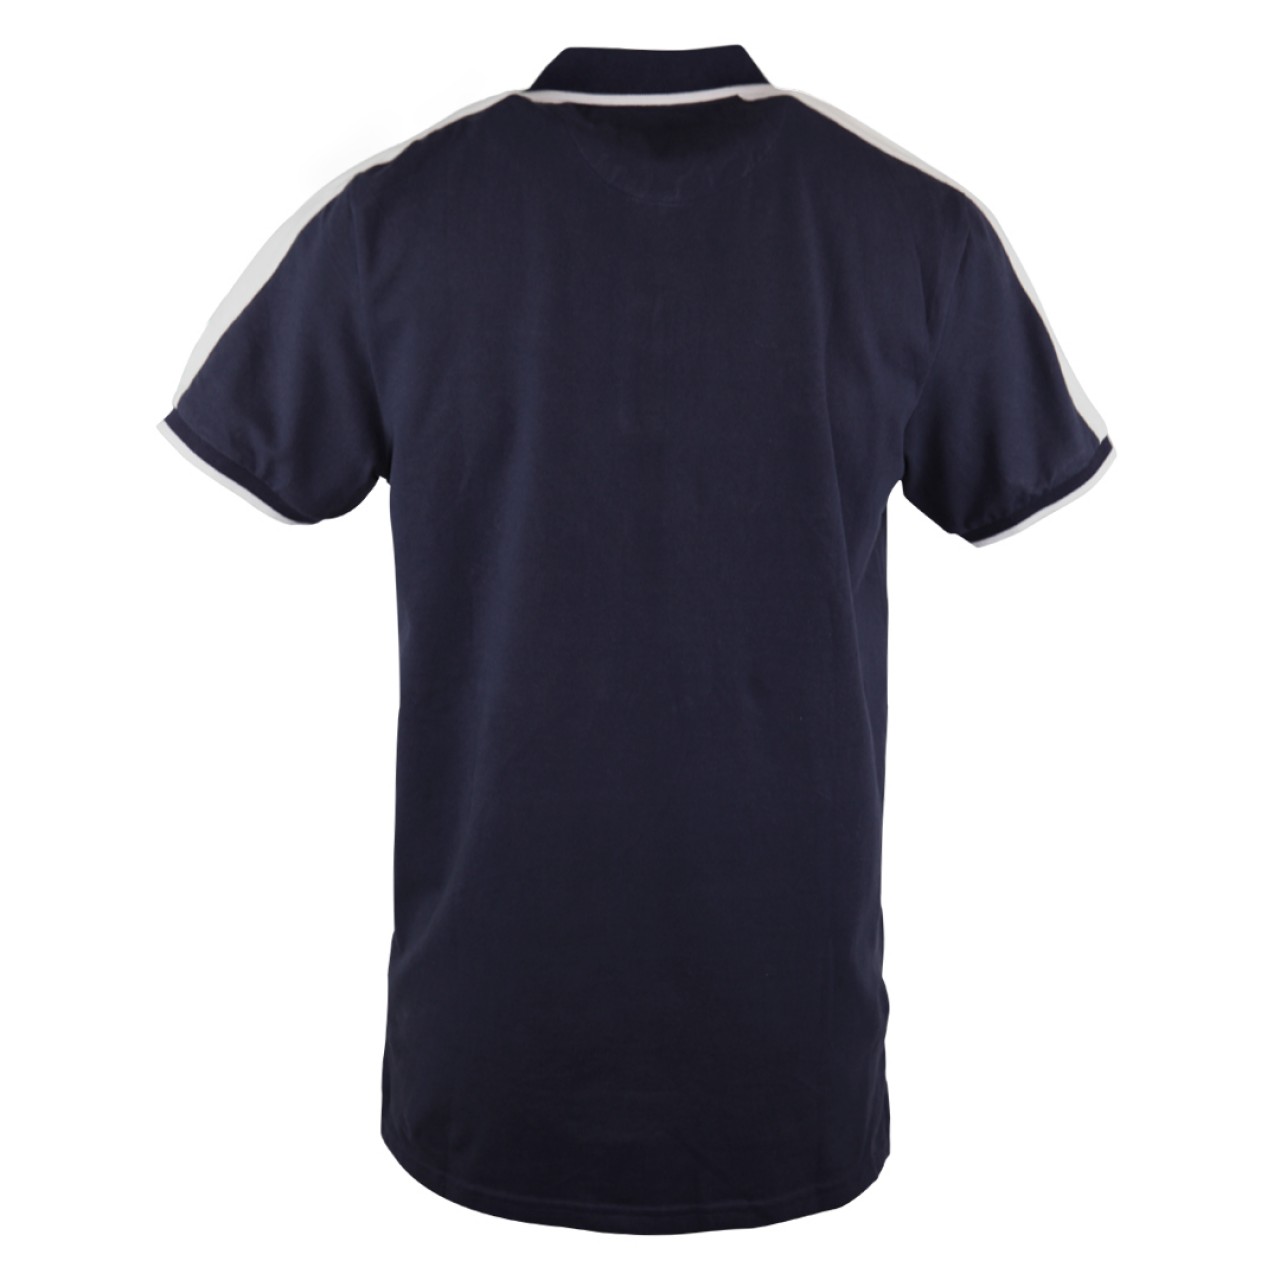 Zeekas White Stripe Pattern Mens Dark Navy Blue Polo T Shirt With Hechter World Tour Overseas Championship Print Design